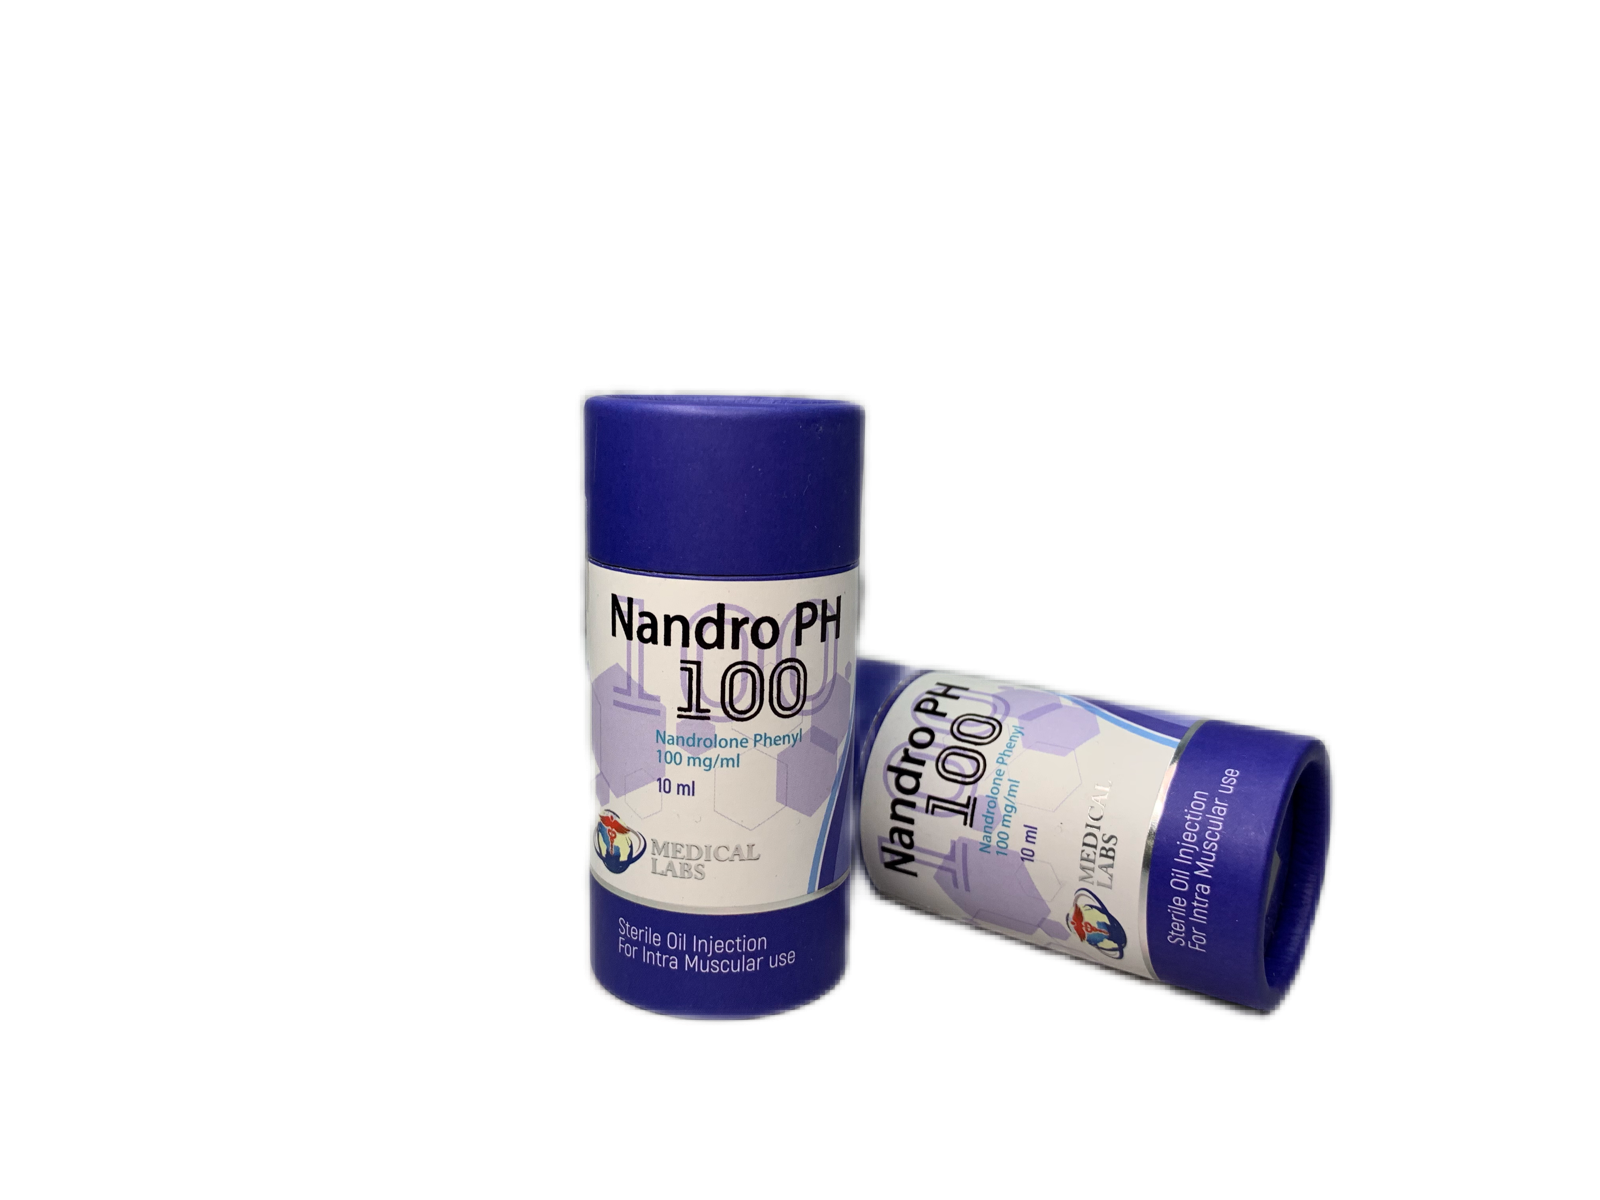 Nandrolone (нандролон) PH